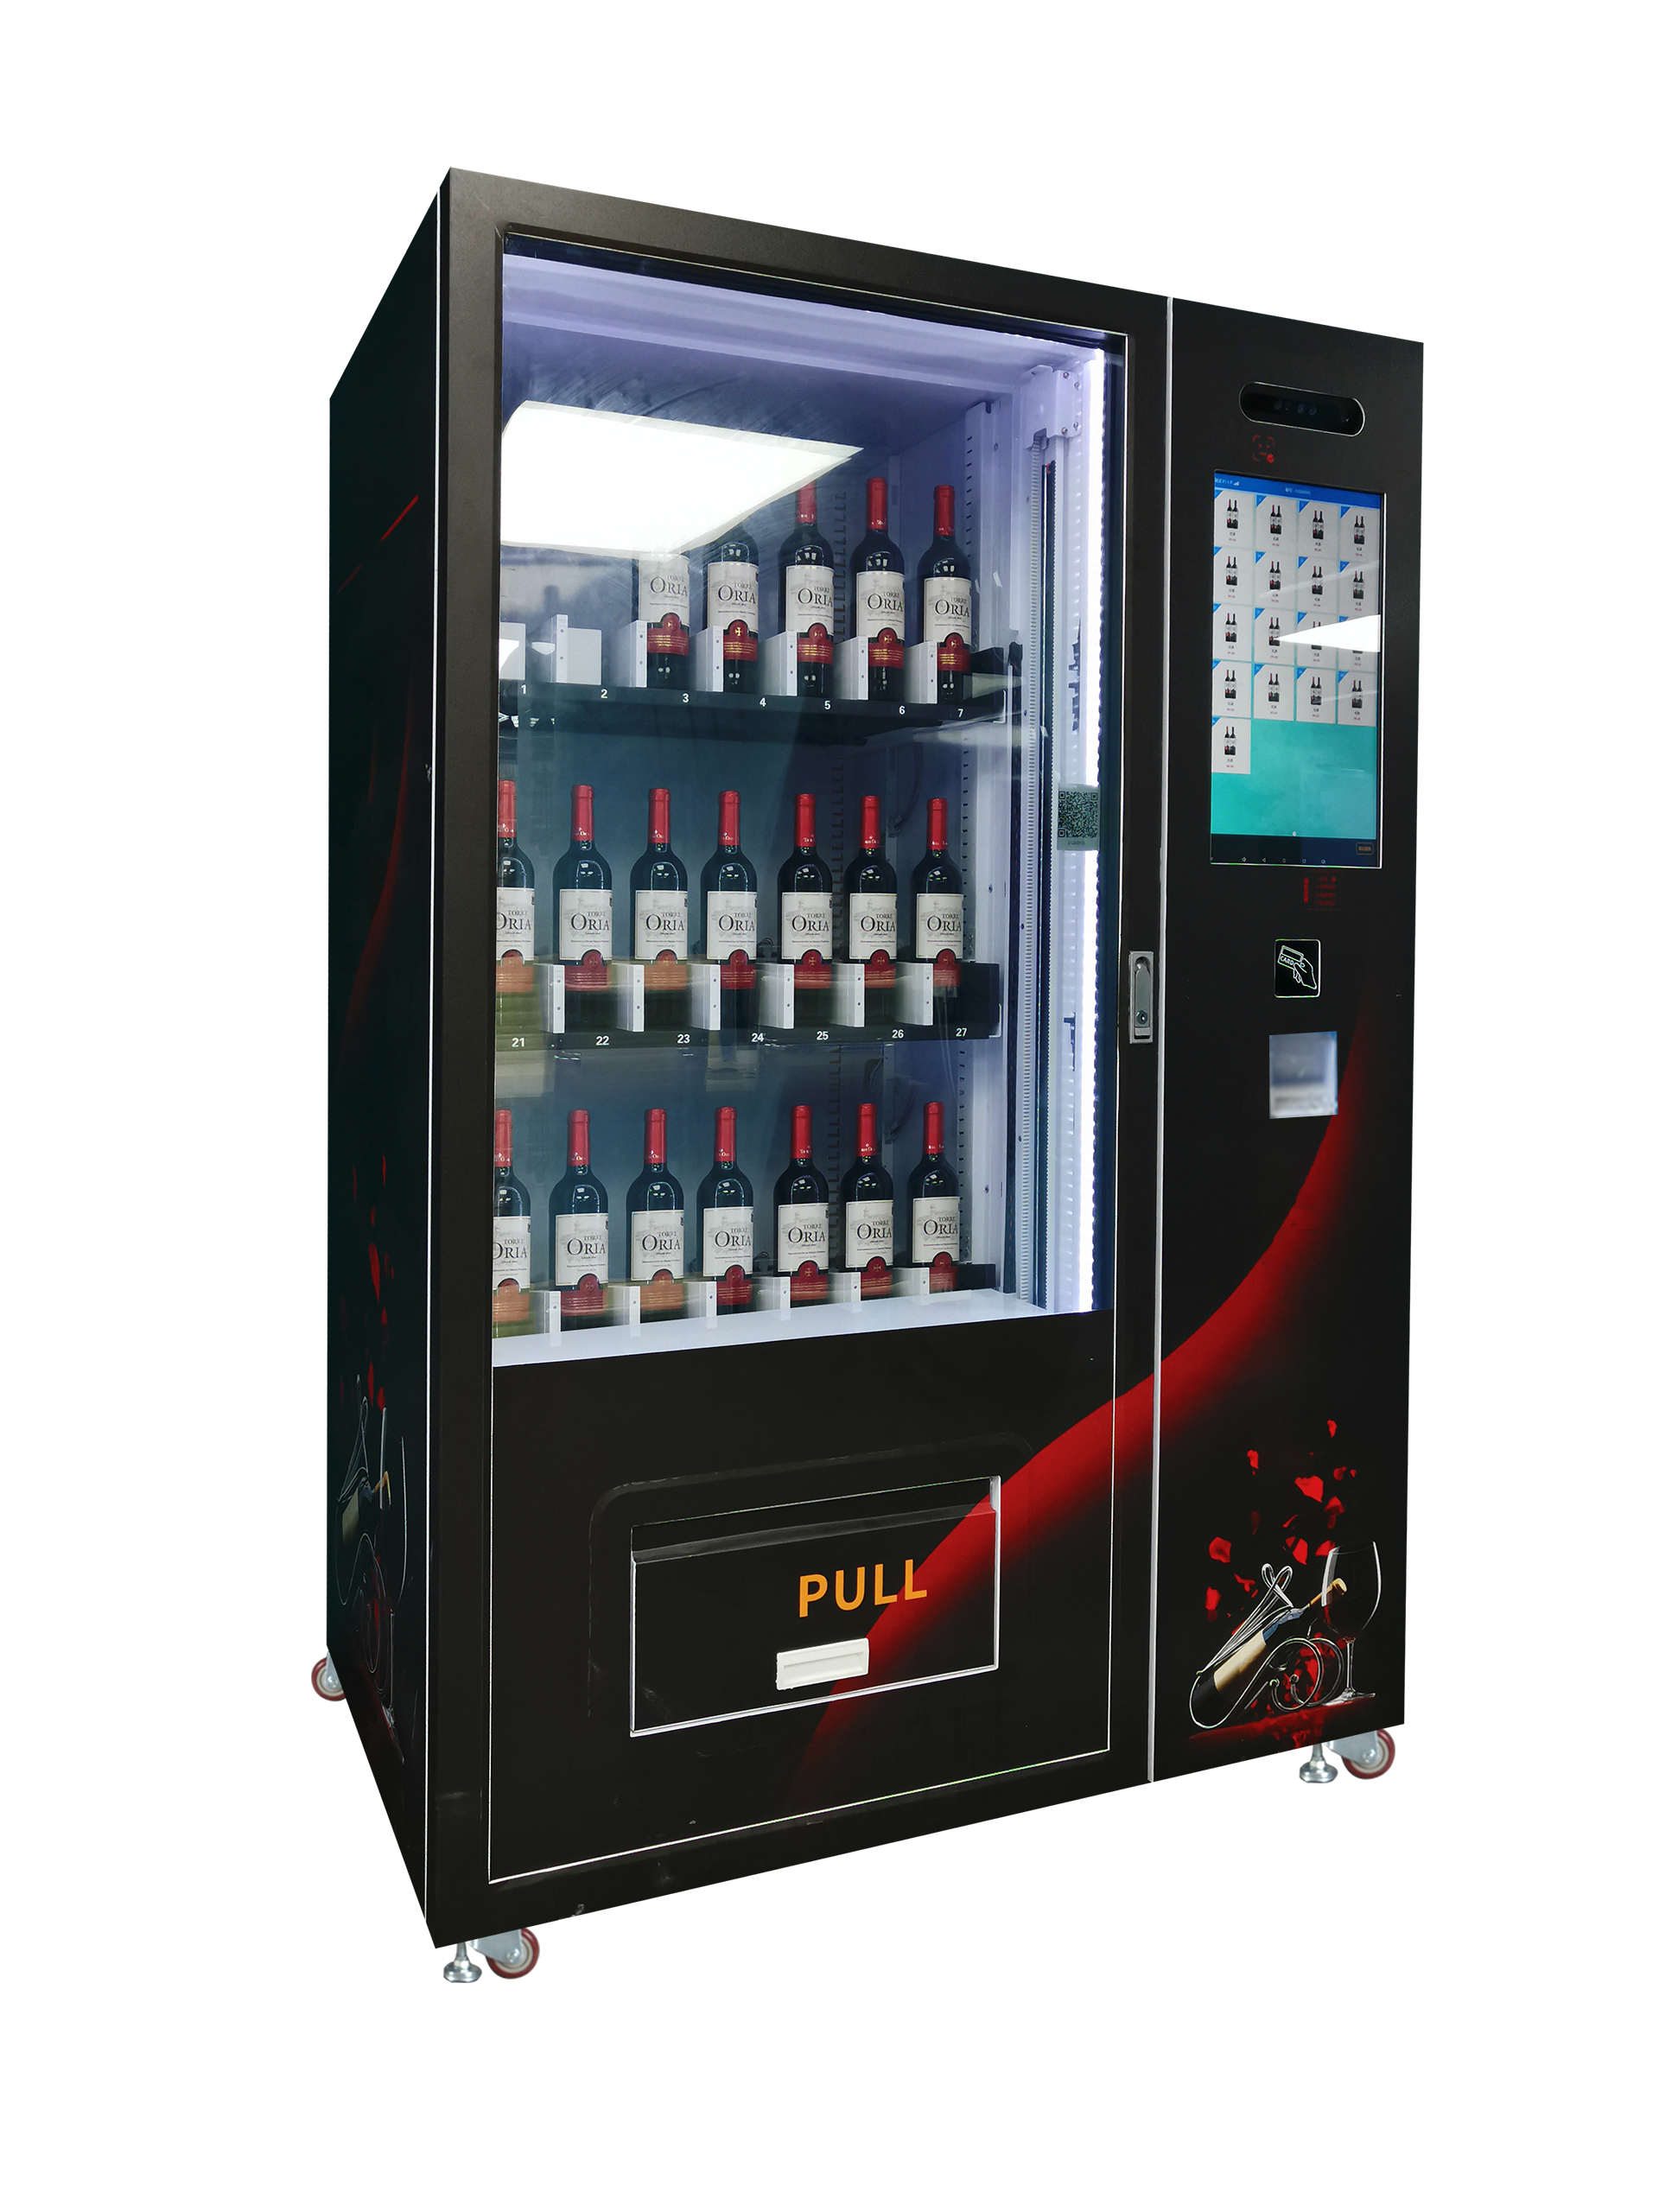 Micron smart wine vending machine